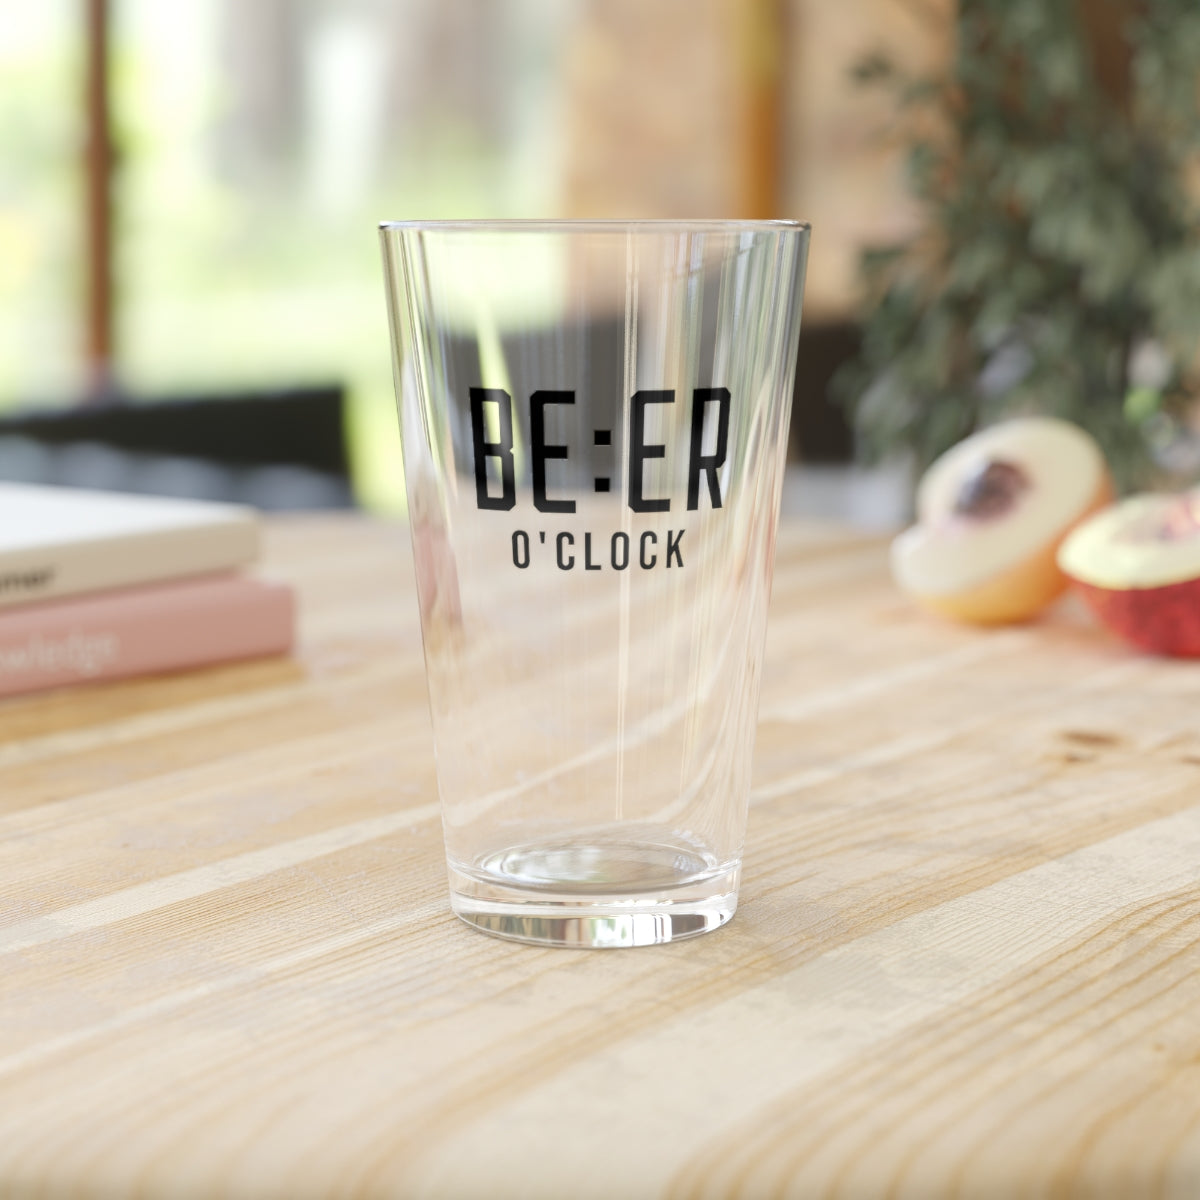 Beer O' Clock | Funny Beer Glass